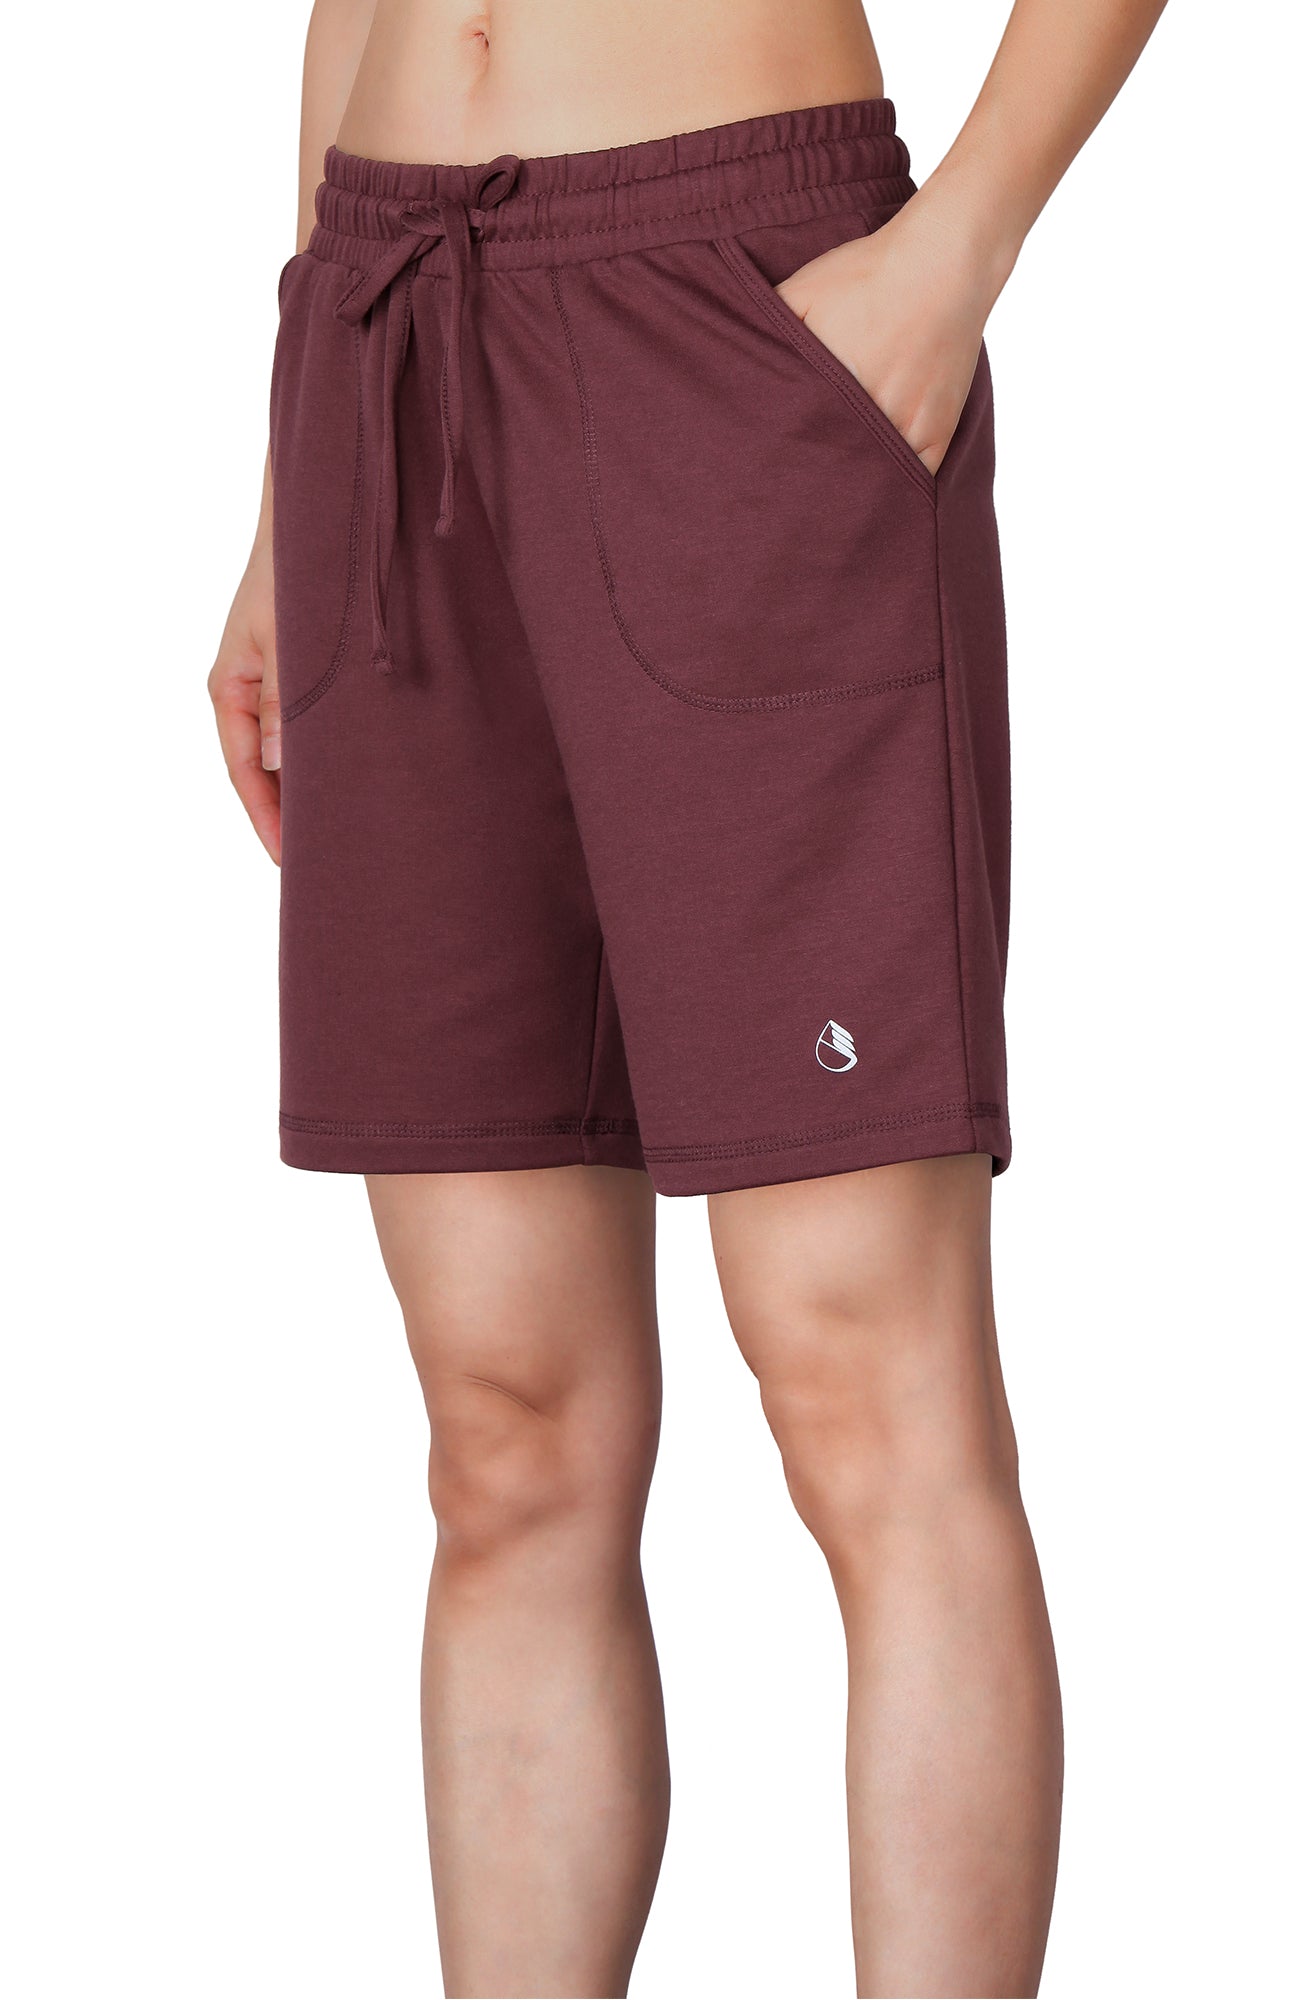 Mojo Sportswear Company Ladies Light Chop Short in Wiregrass Size: S